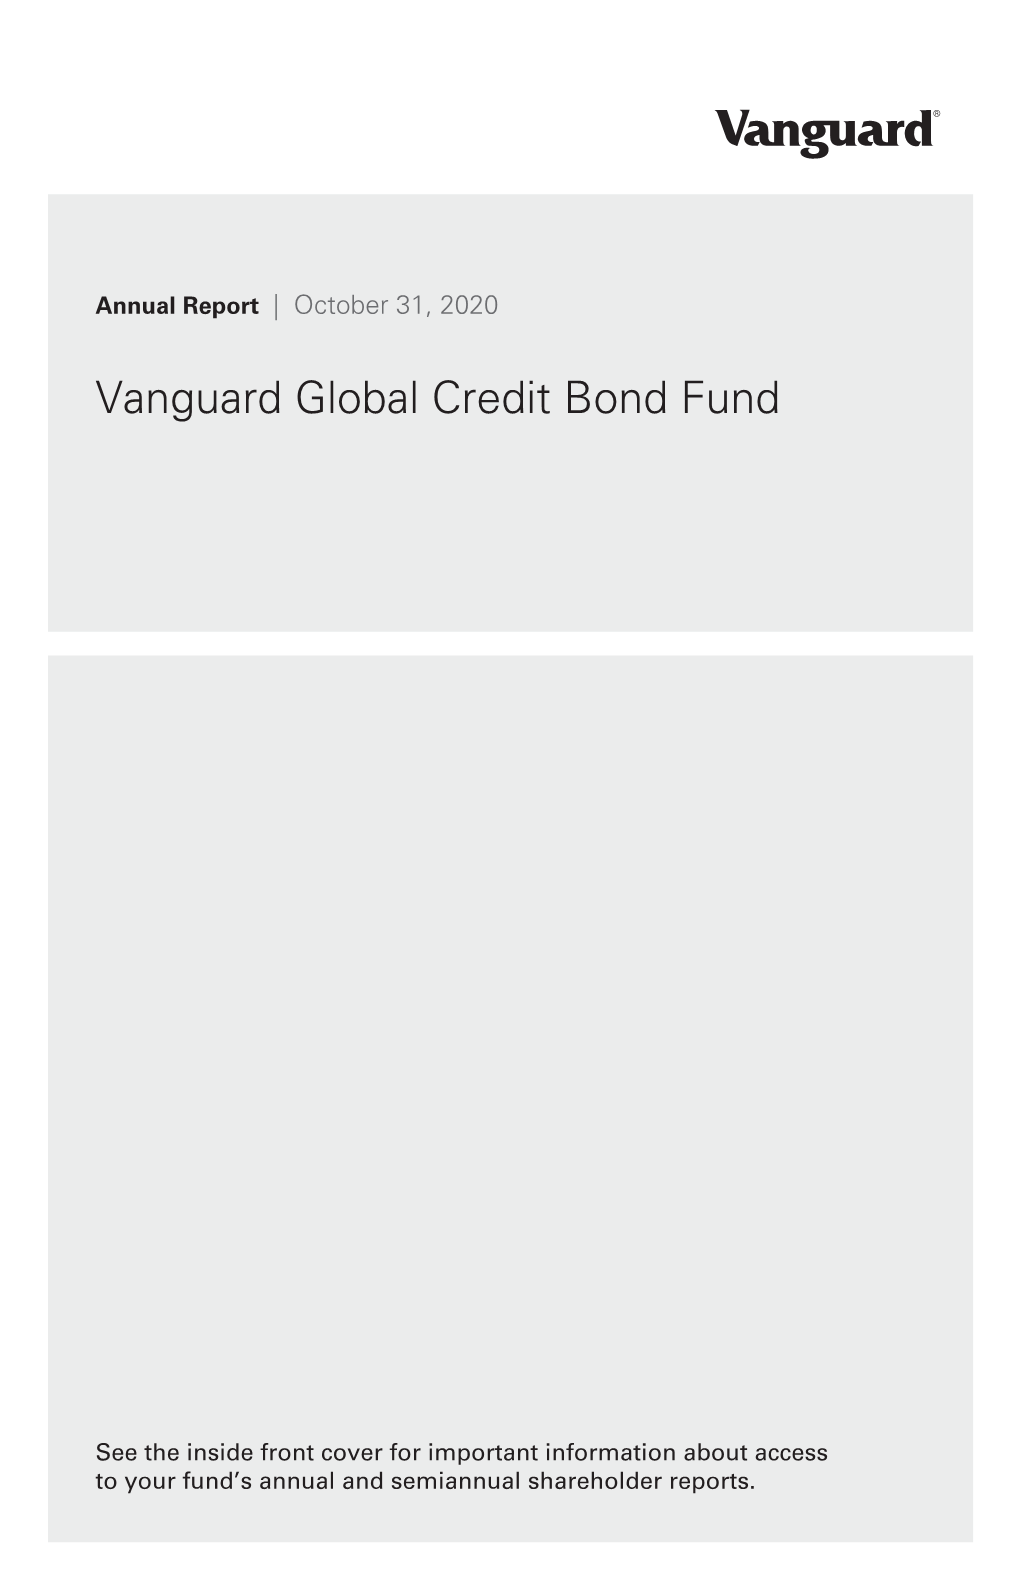 Vanguard Global Credit Bond Fund Annual Report October 31, 2020